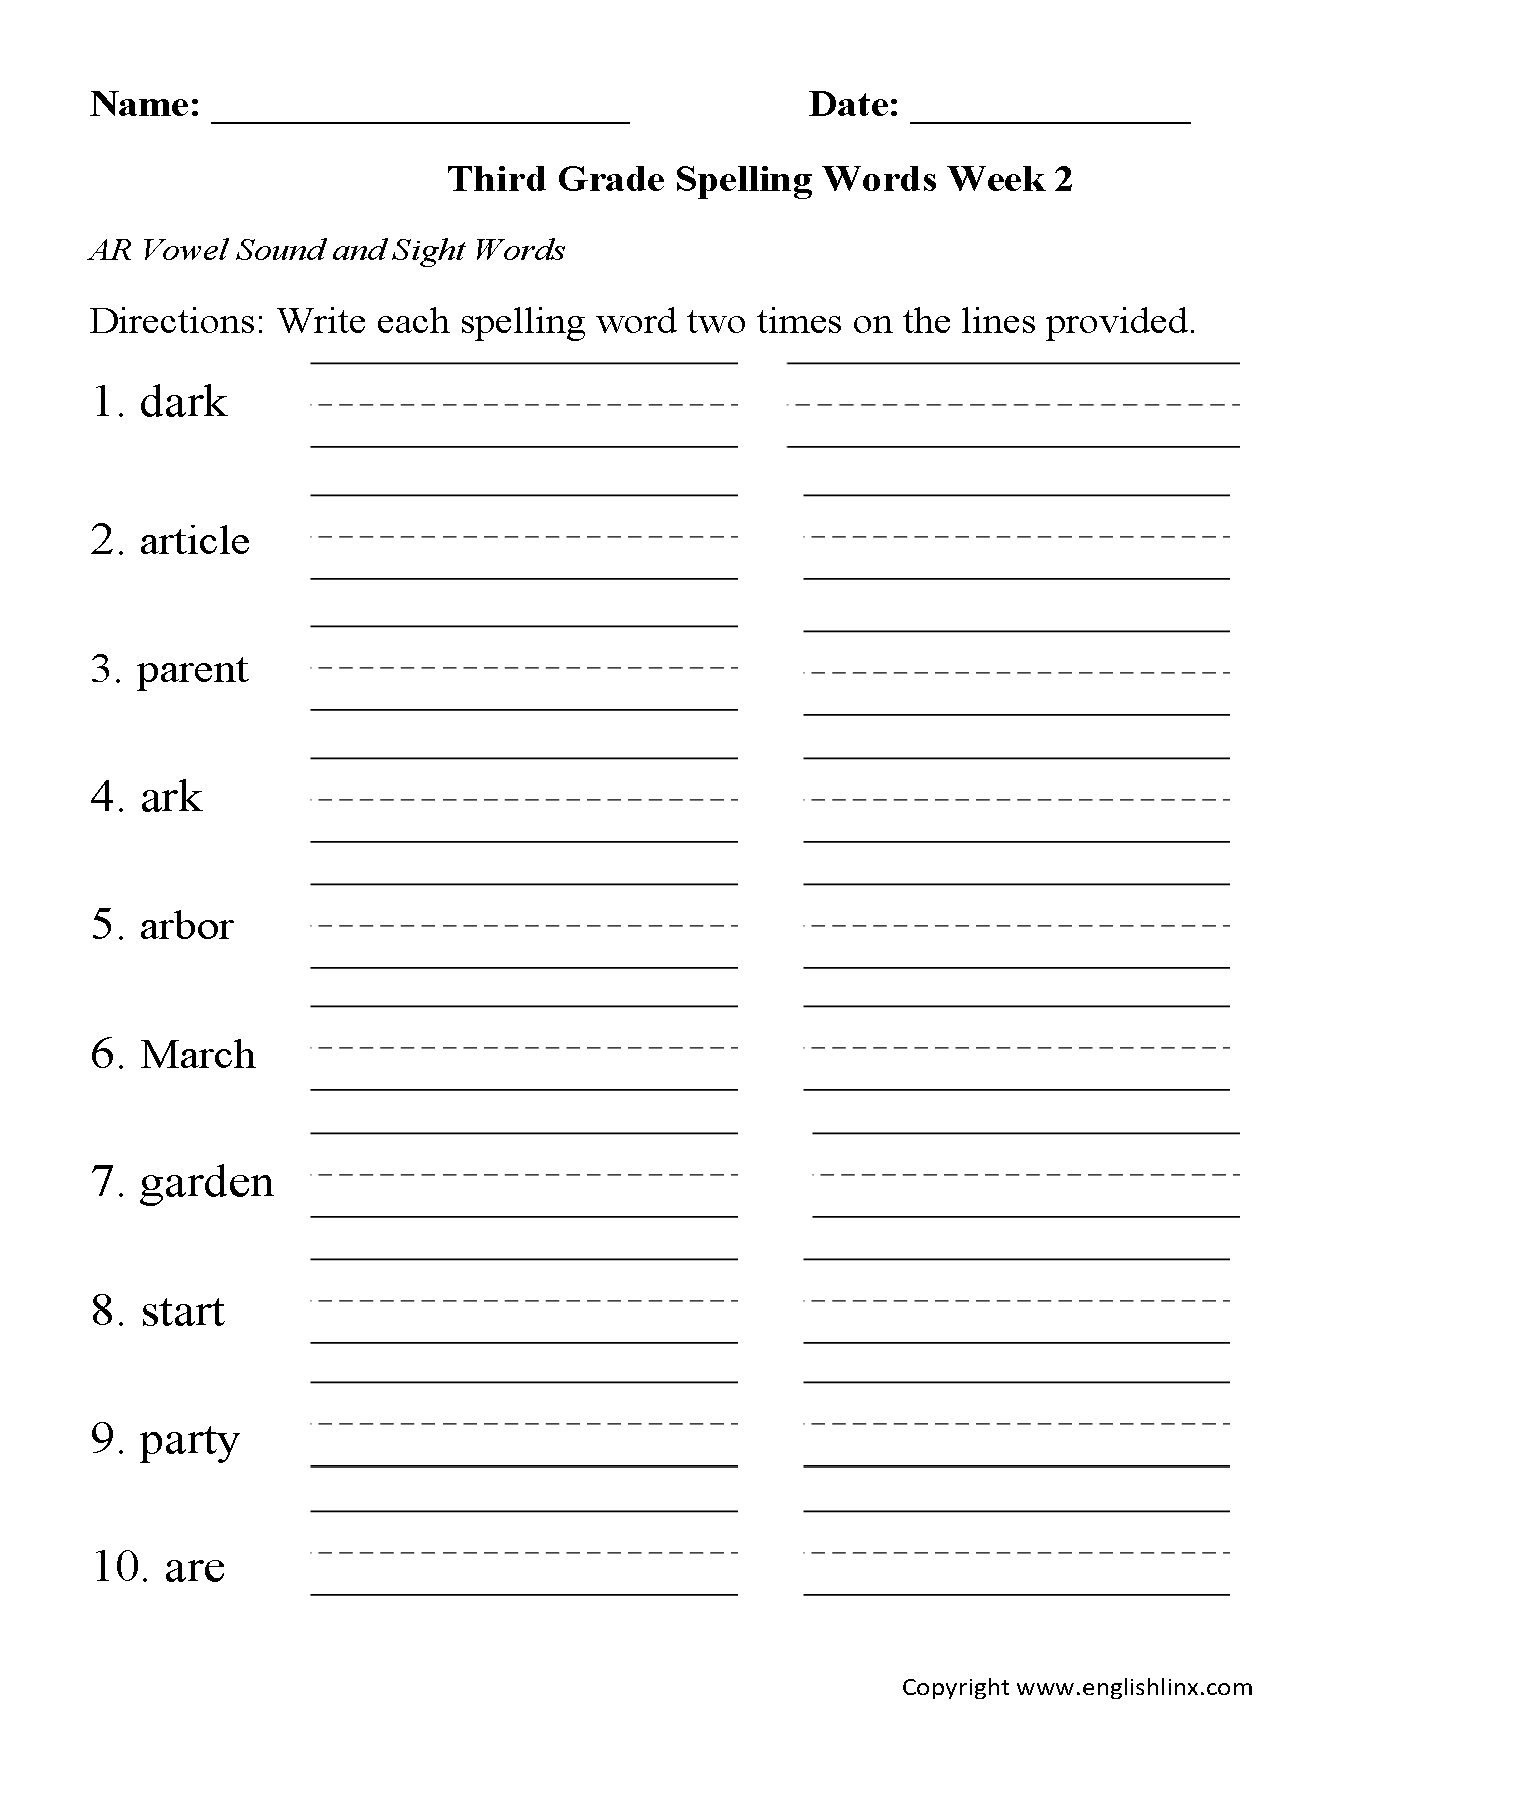 Spelling Worksheets  Third Grade Spelling Worksheets Together With Spelling Practice Worksheets